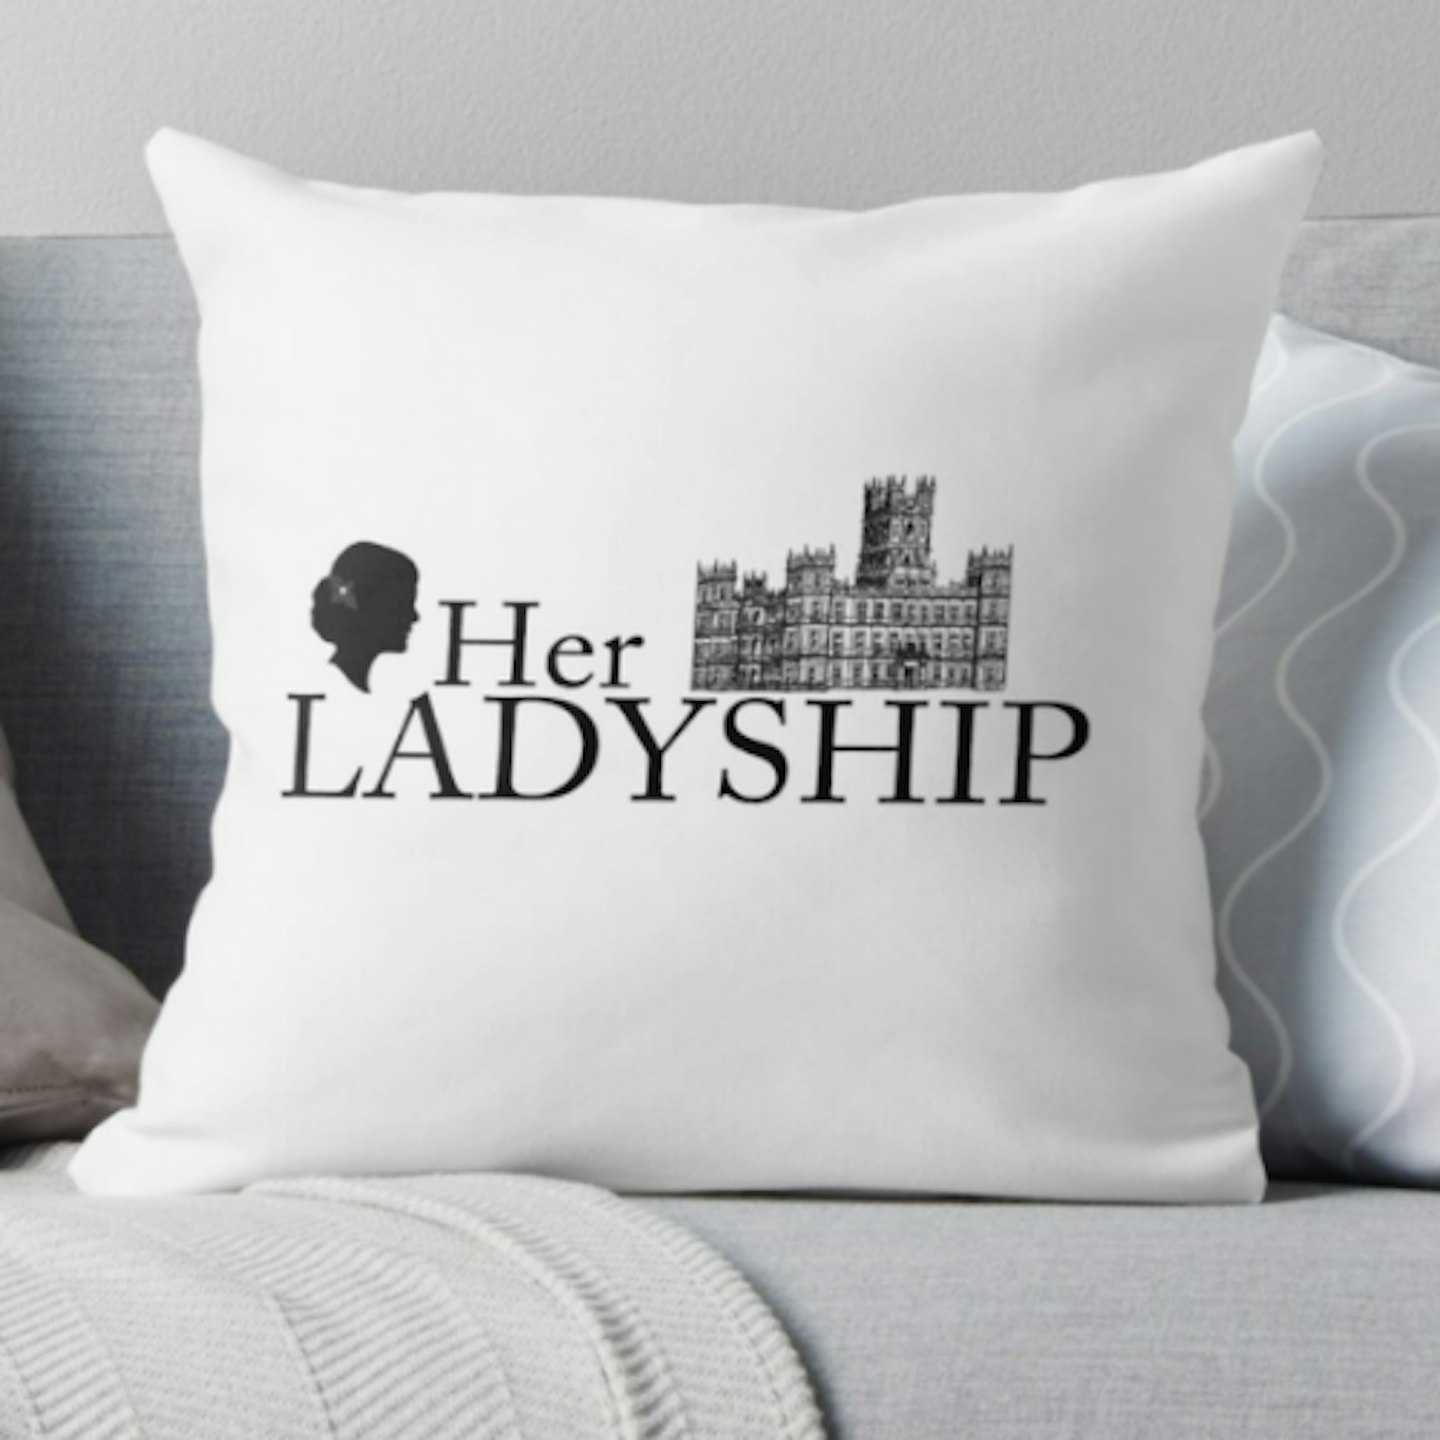 Her Ladyship Throw Pillow